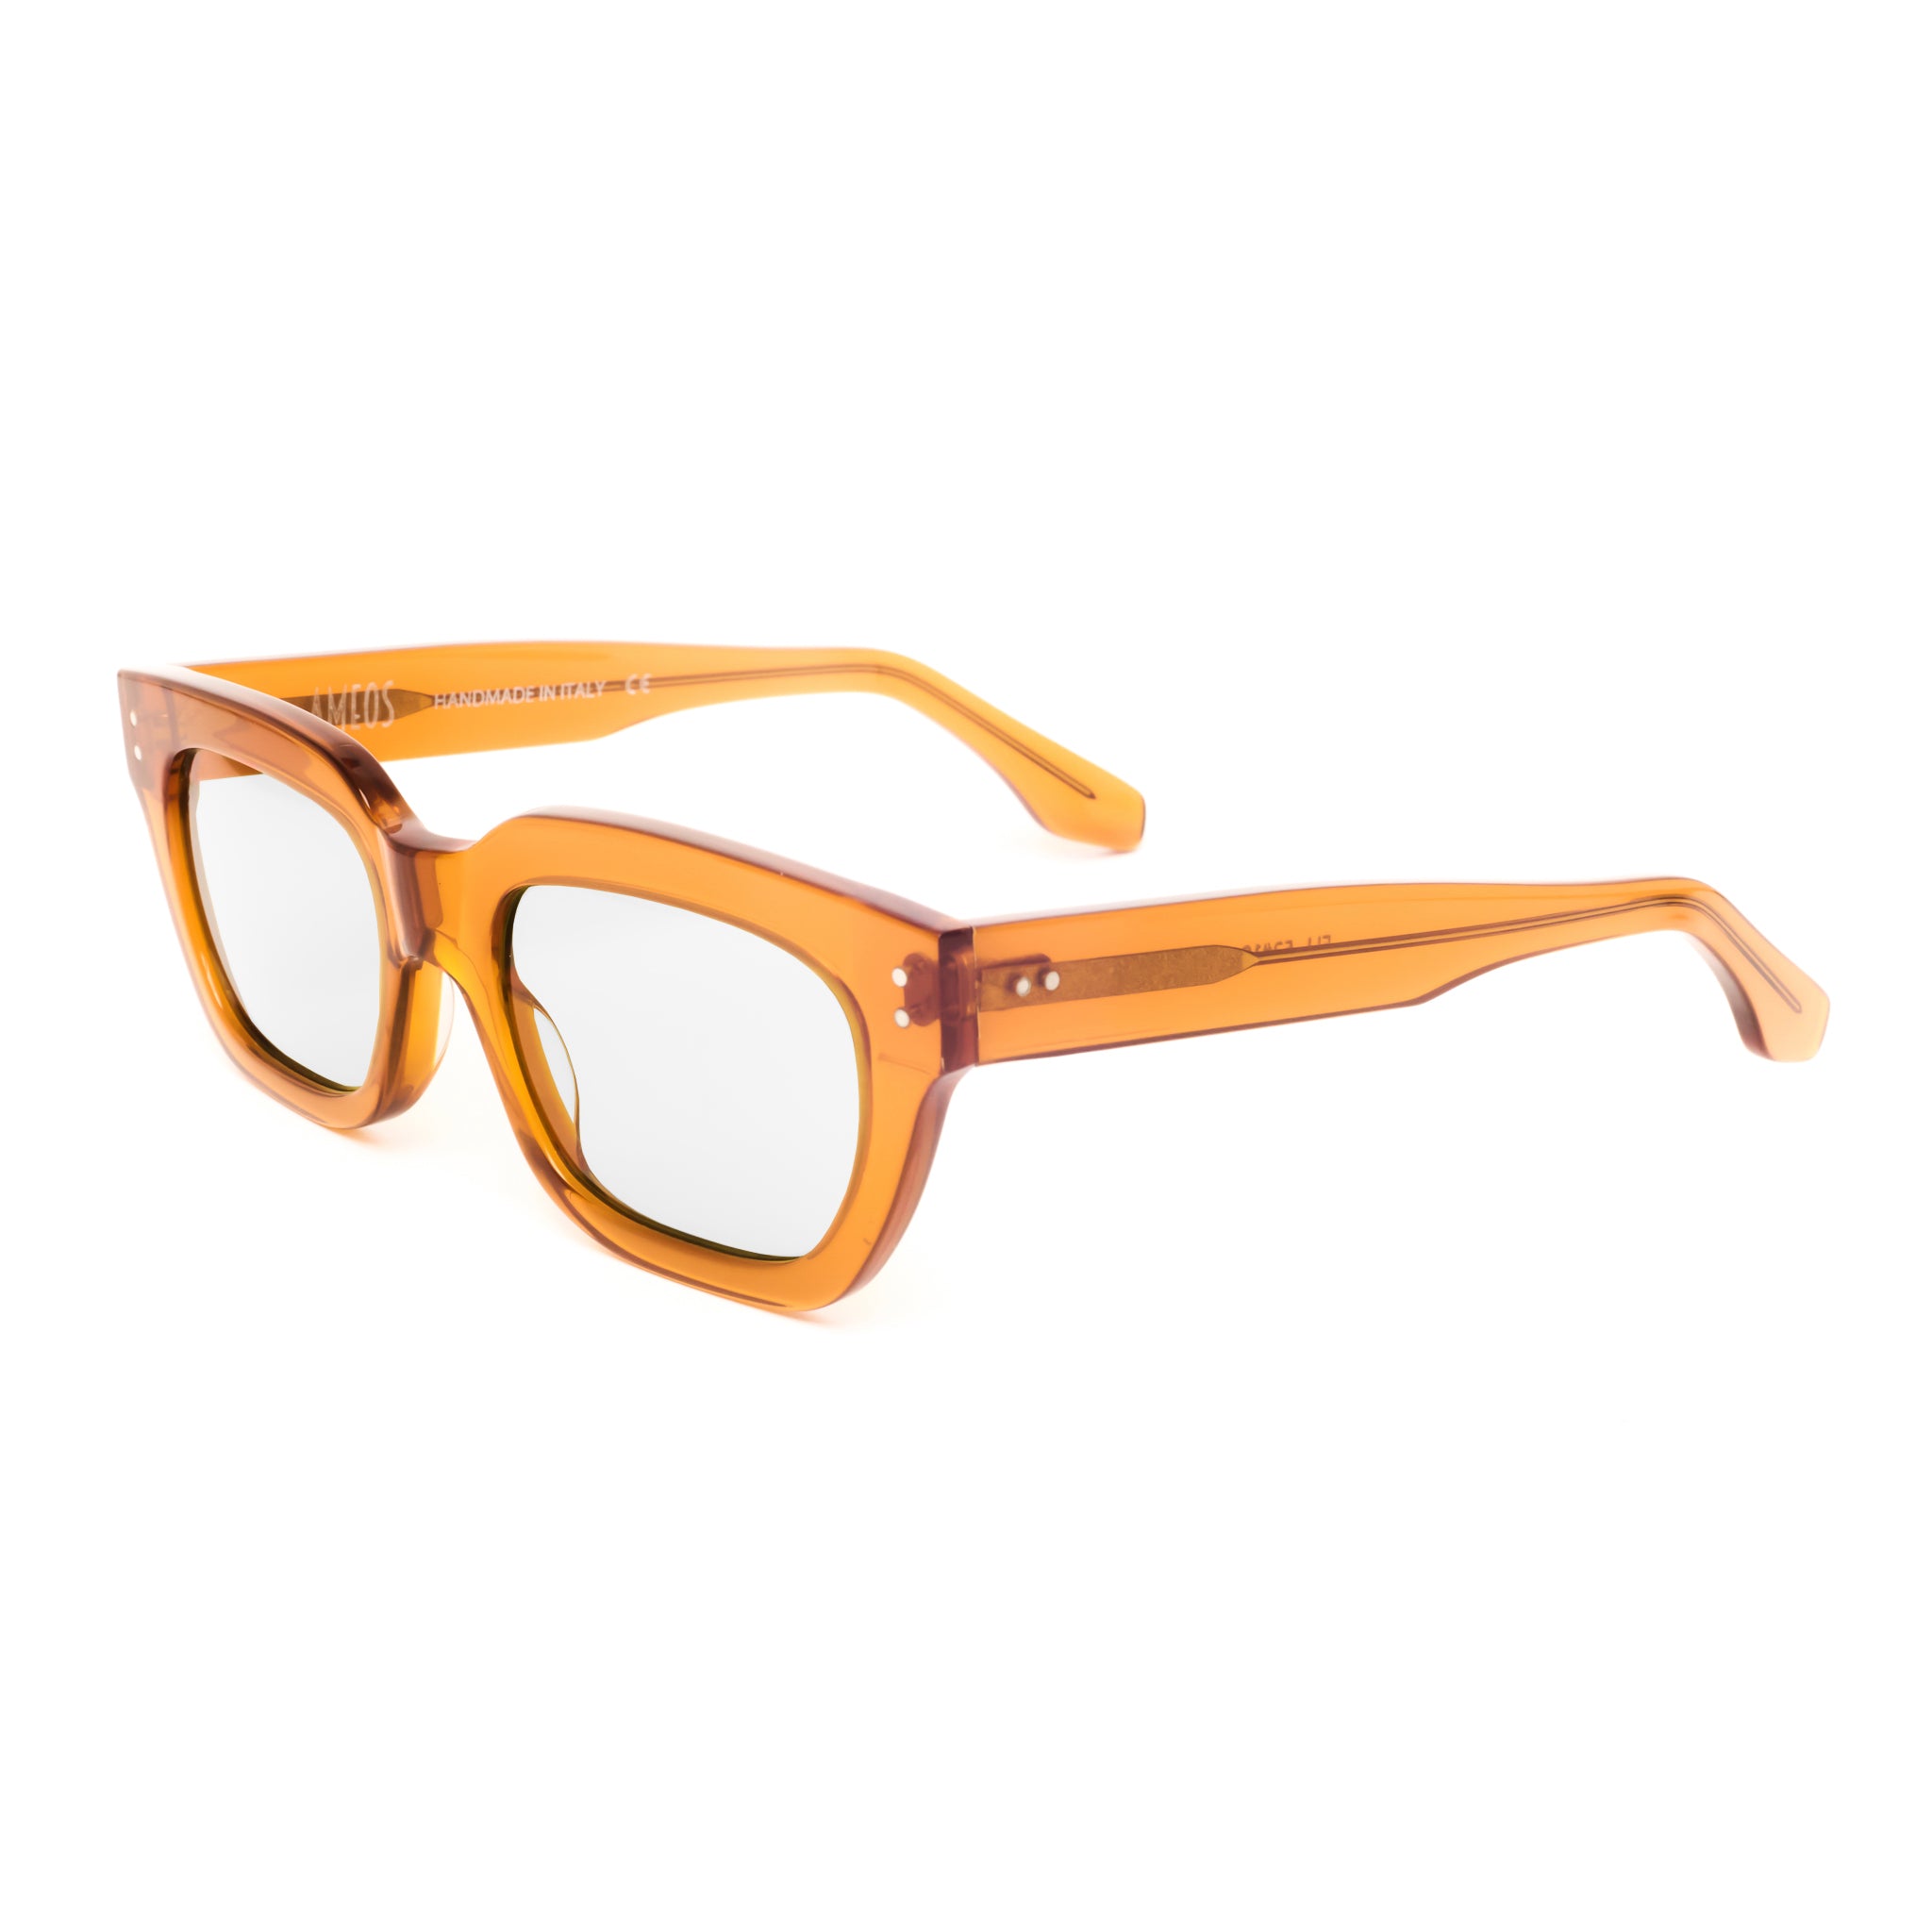 Ameos Forever collection Eli optical glasses. Transparent caramel frames, unisex eyewear.